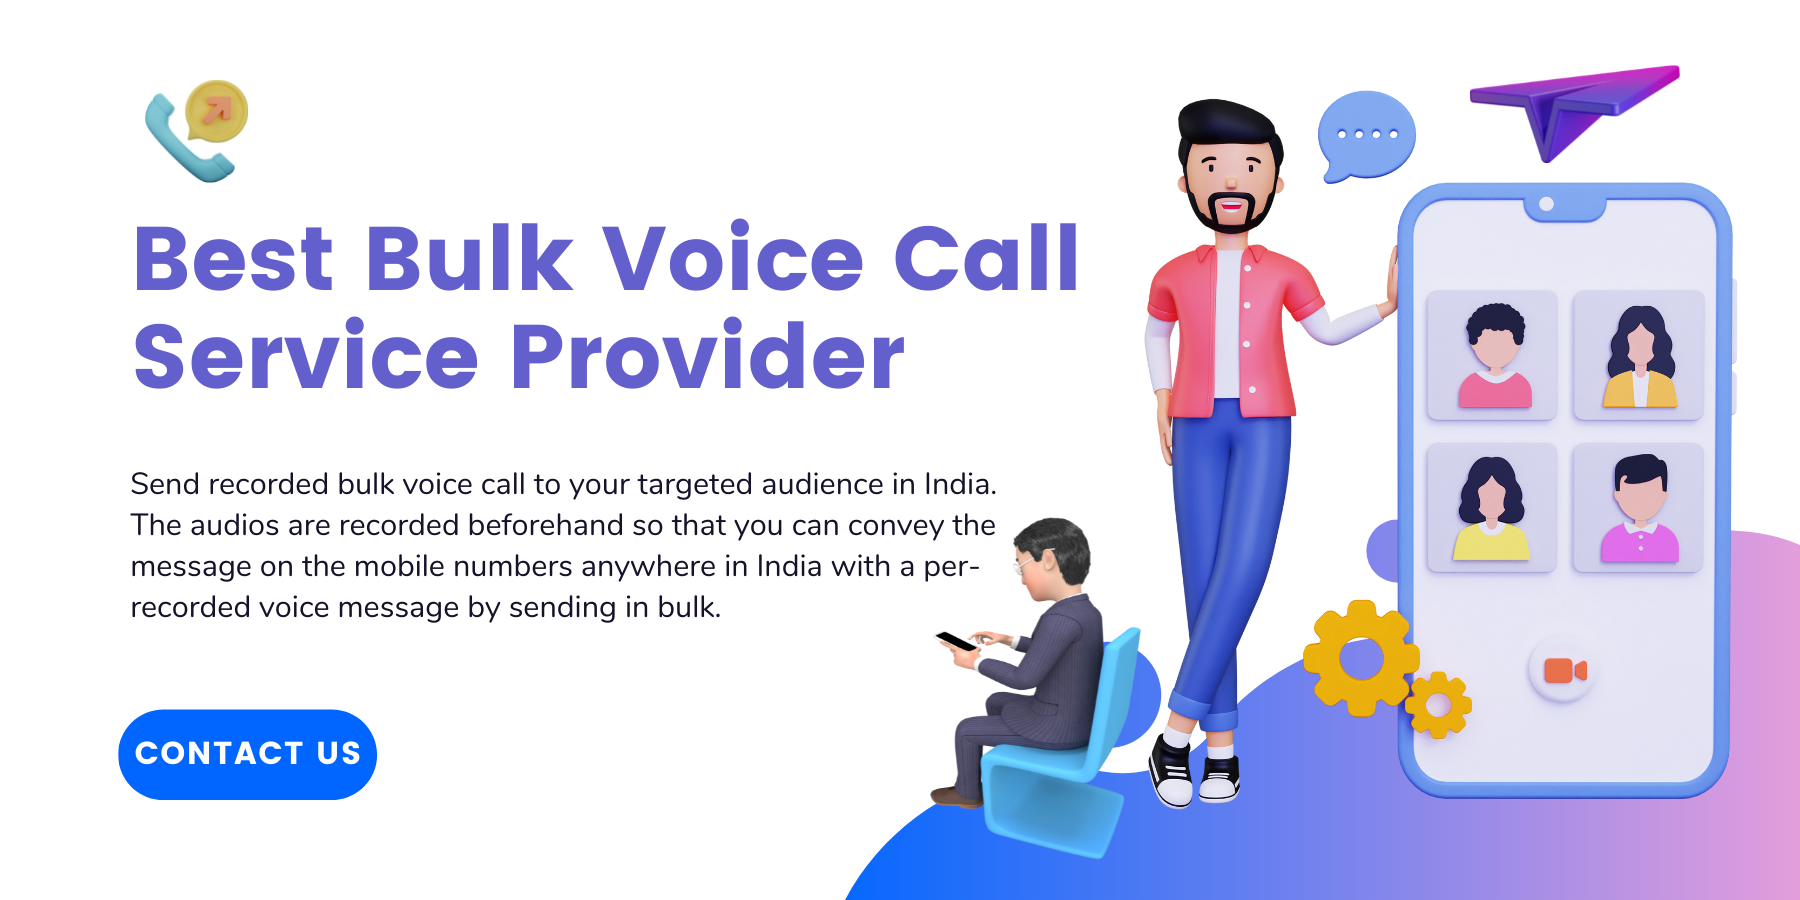 Best Bulk Voice Call Service Provider